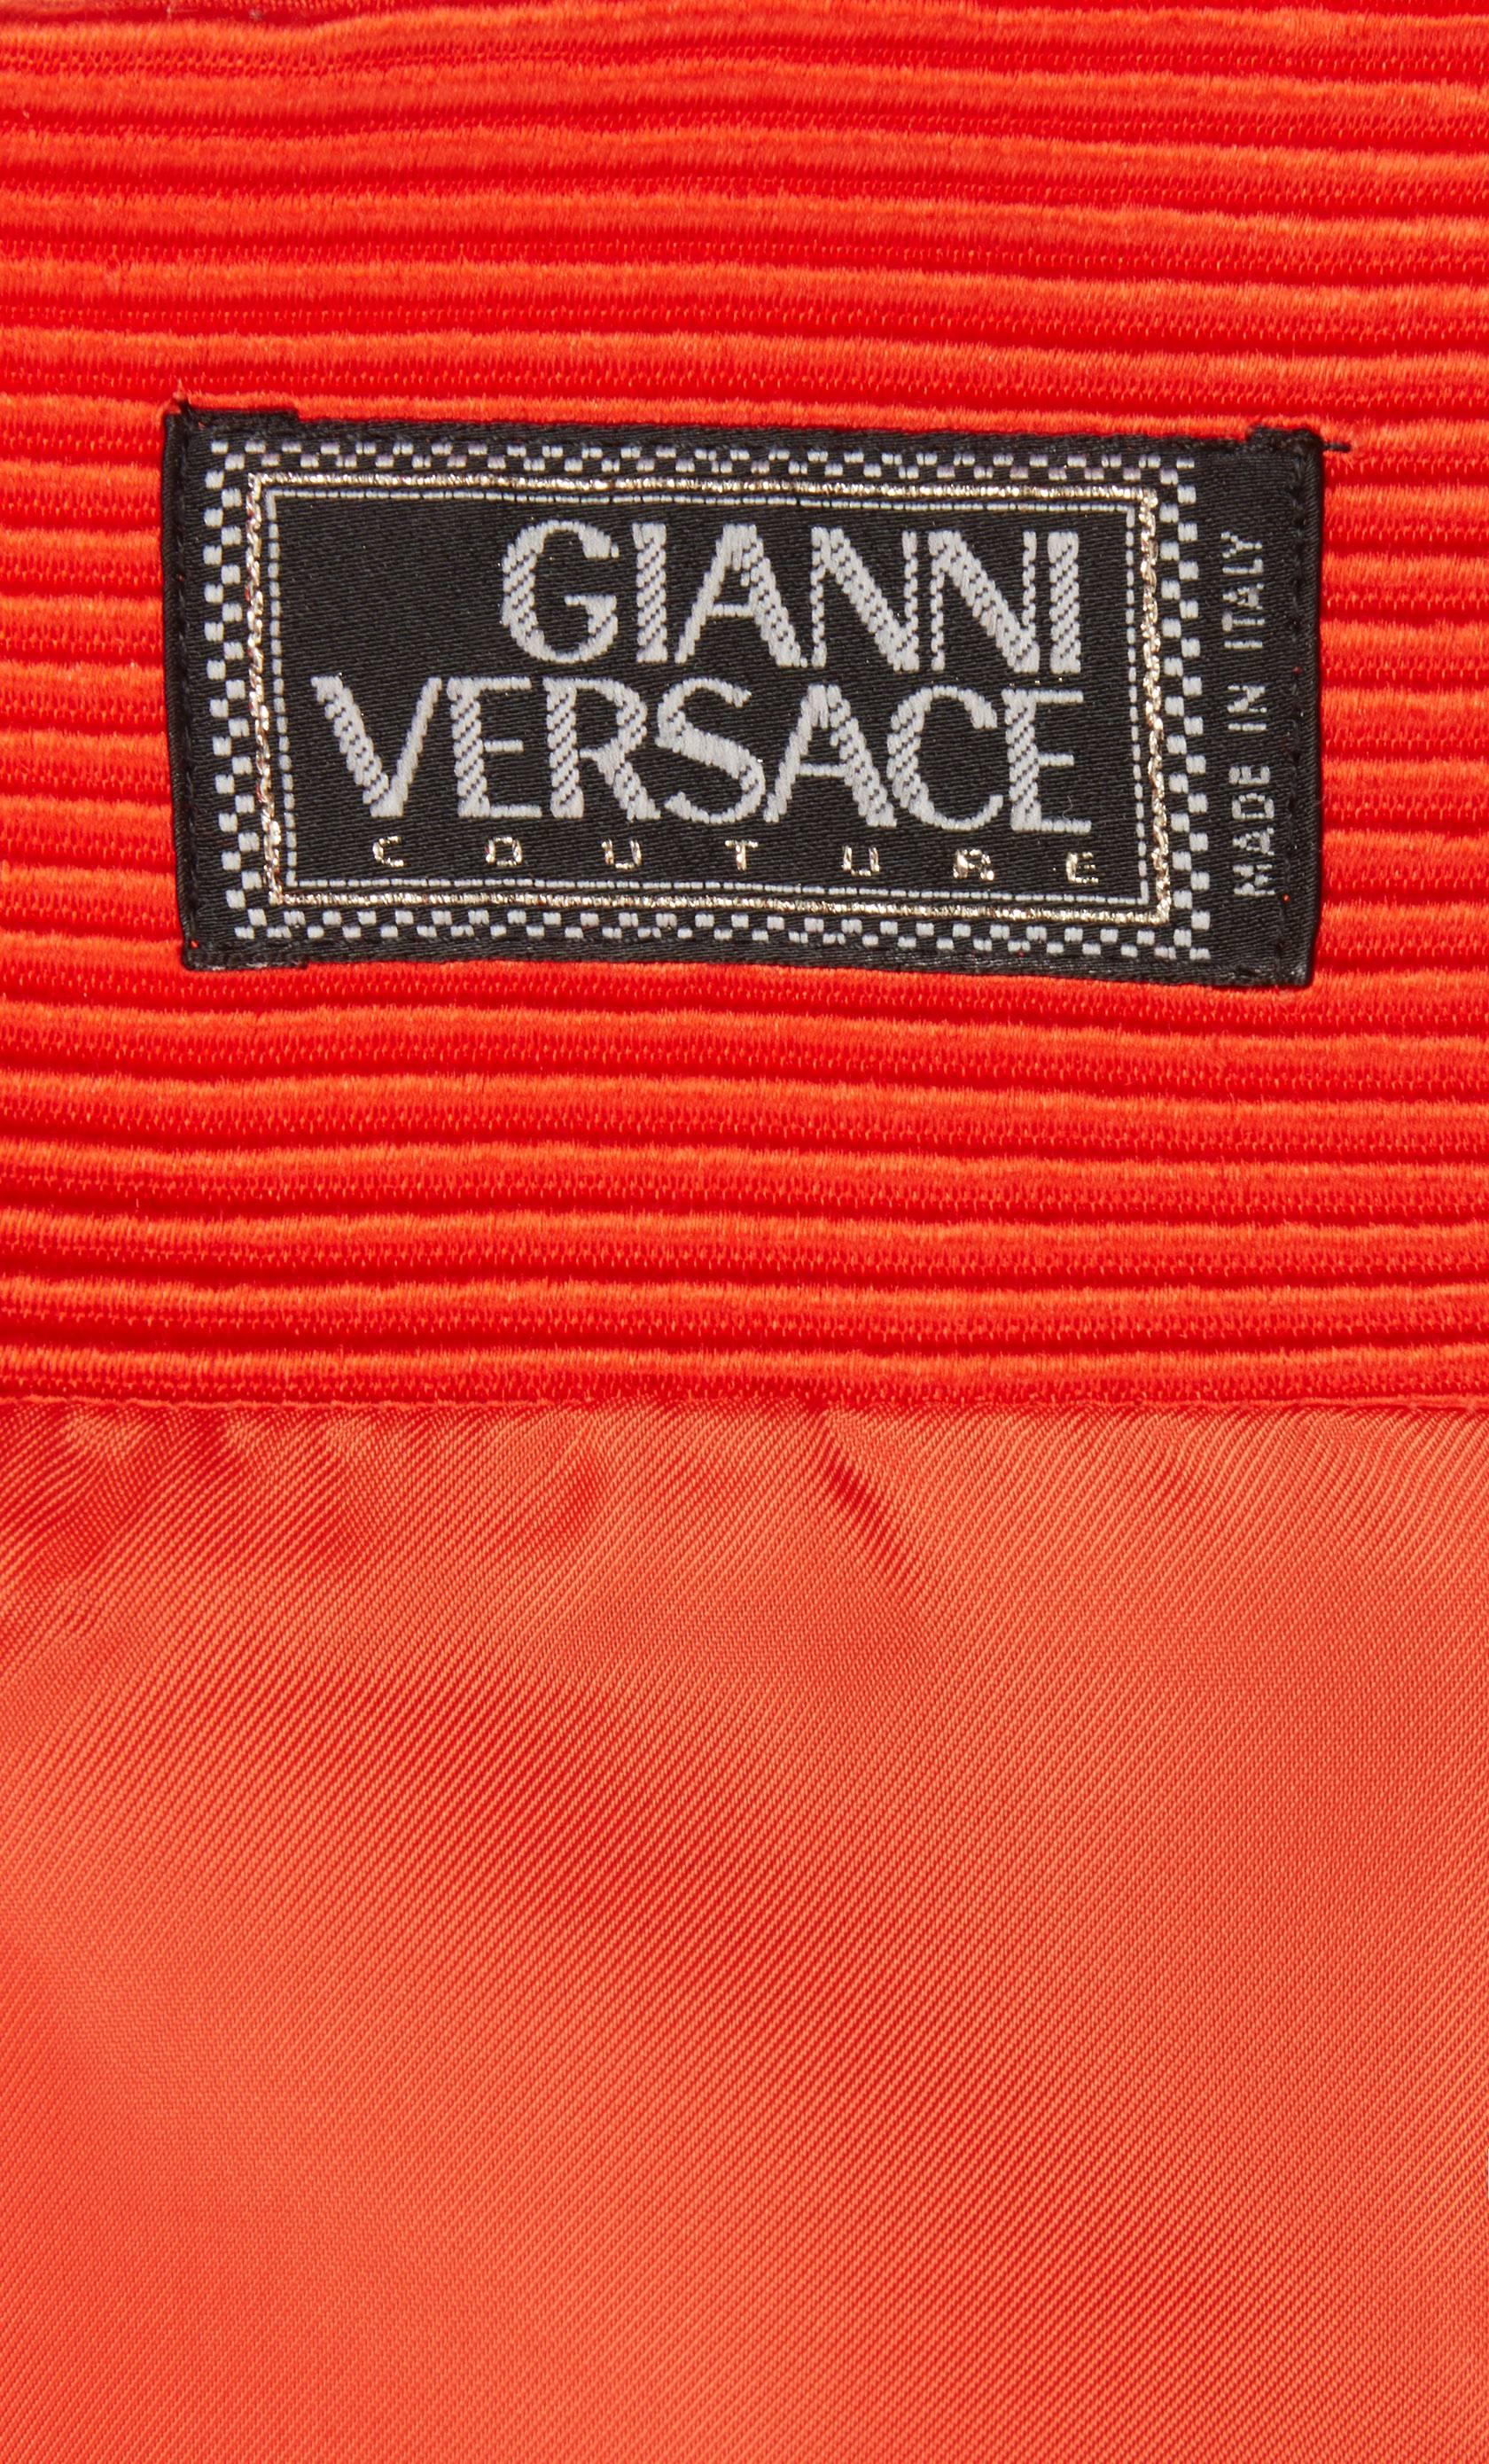 Versace Orange dress with bag, Autumn/Winter 1991 2